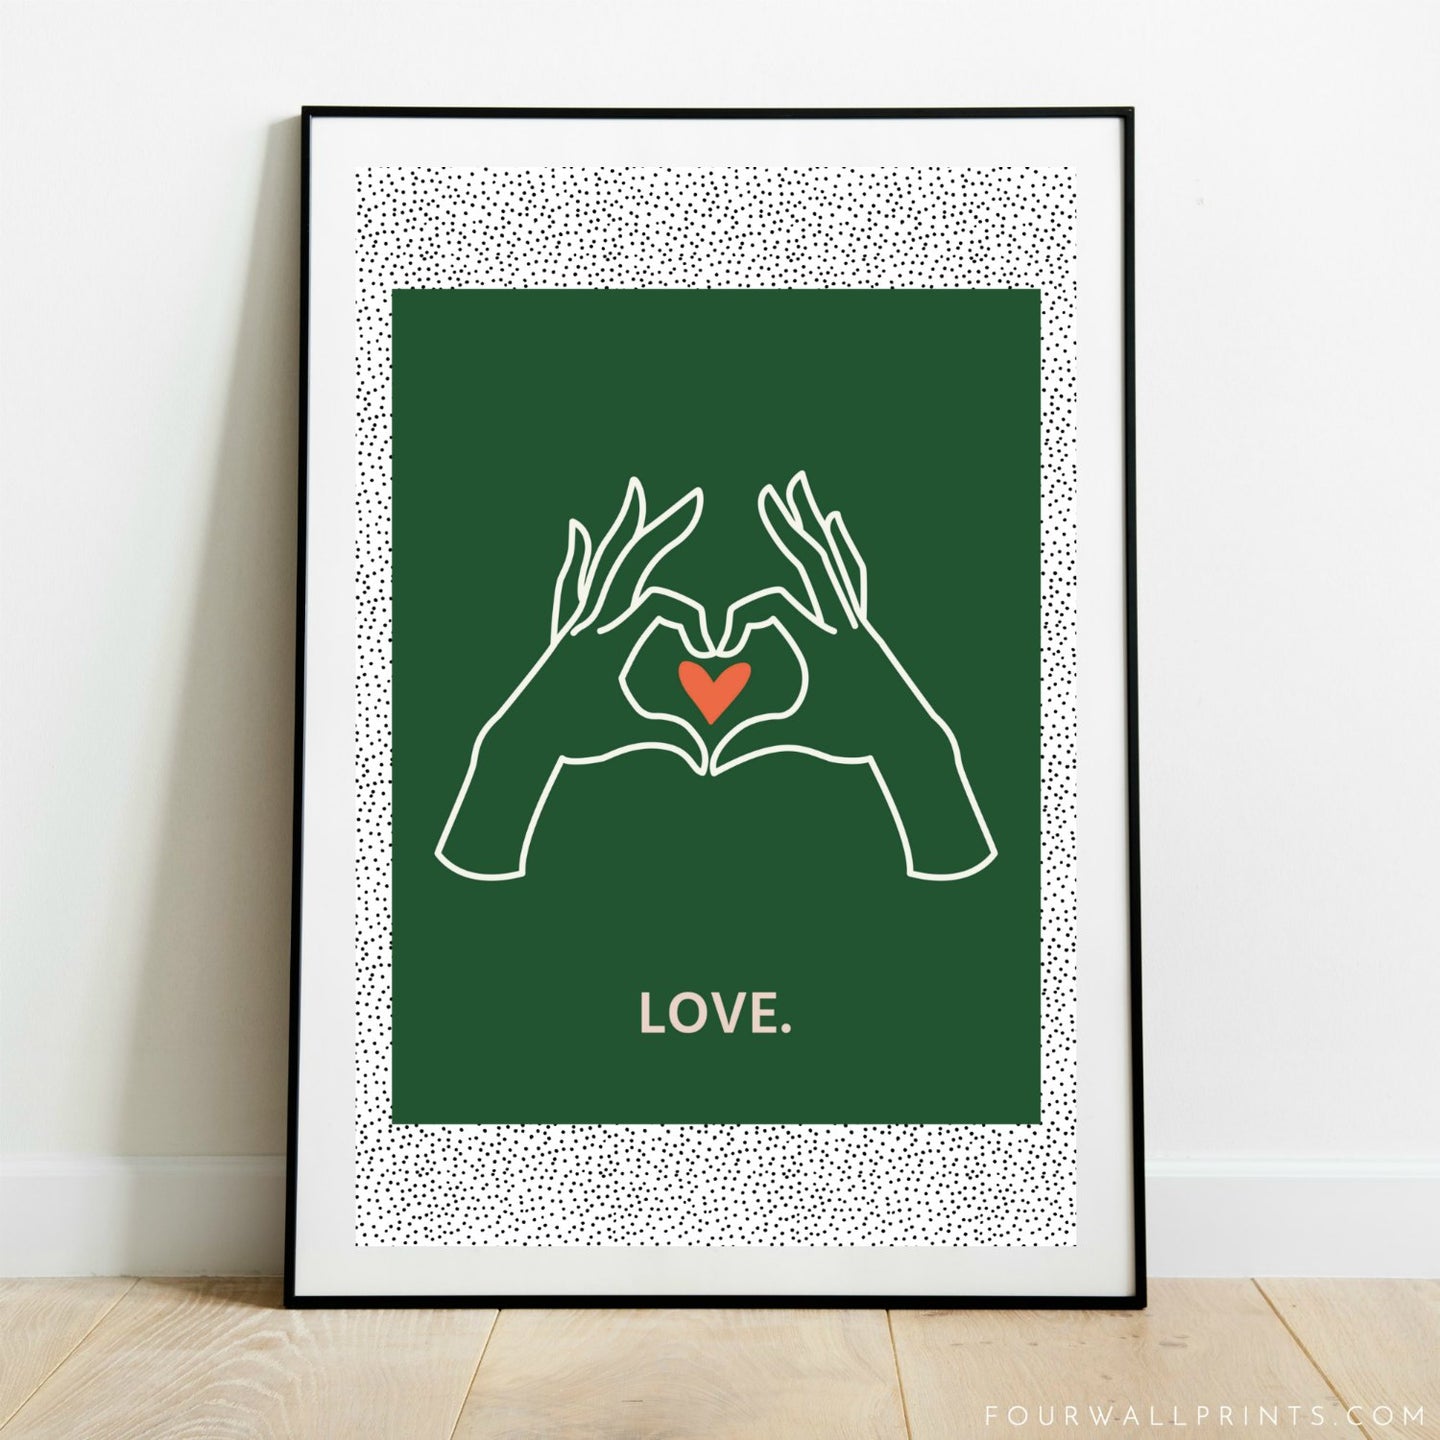 Love (Green)